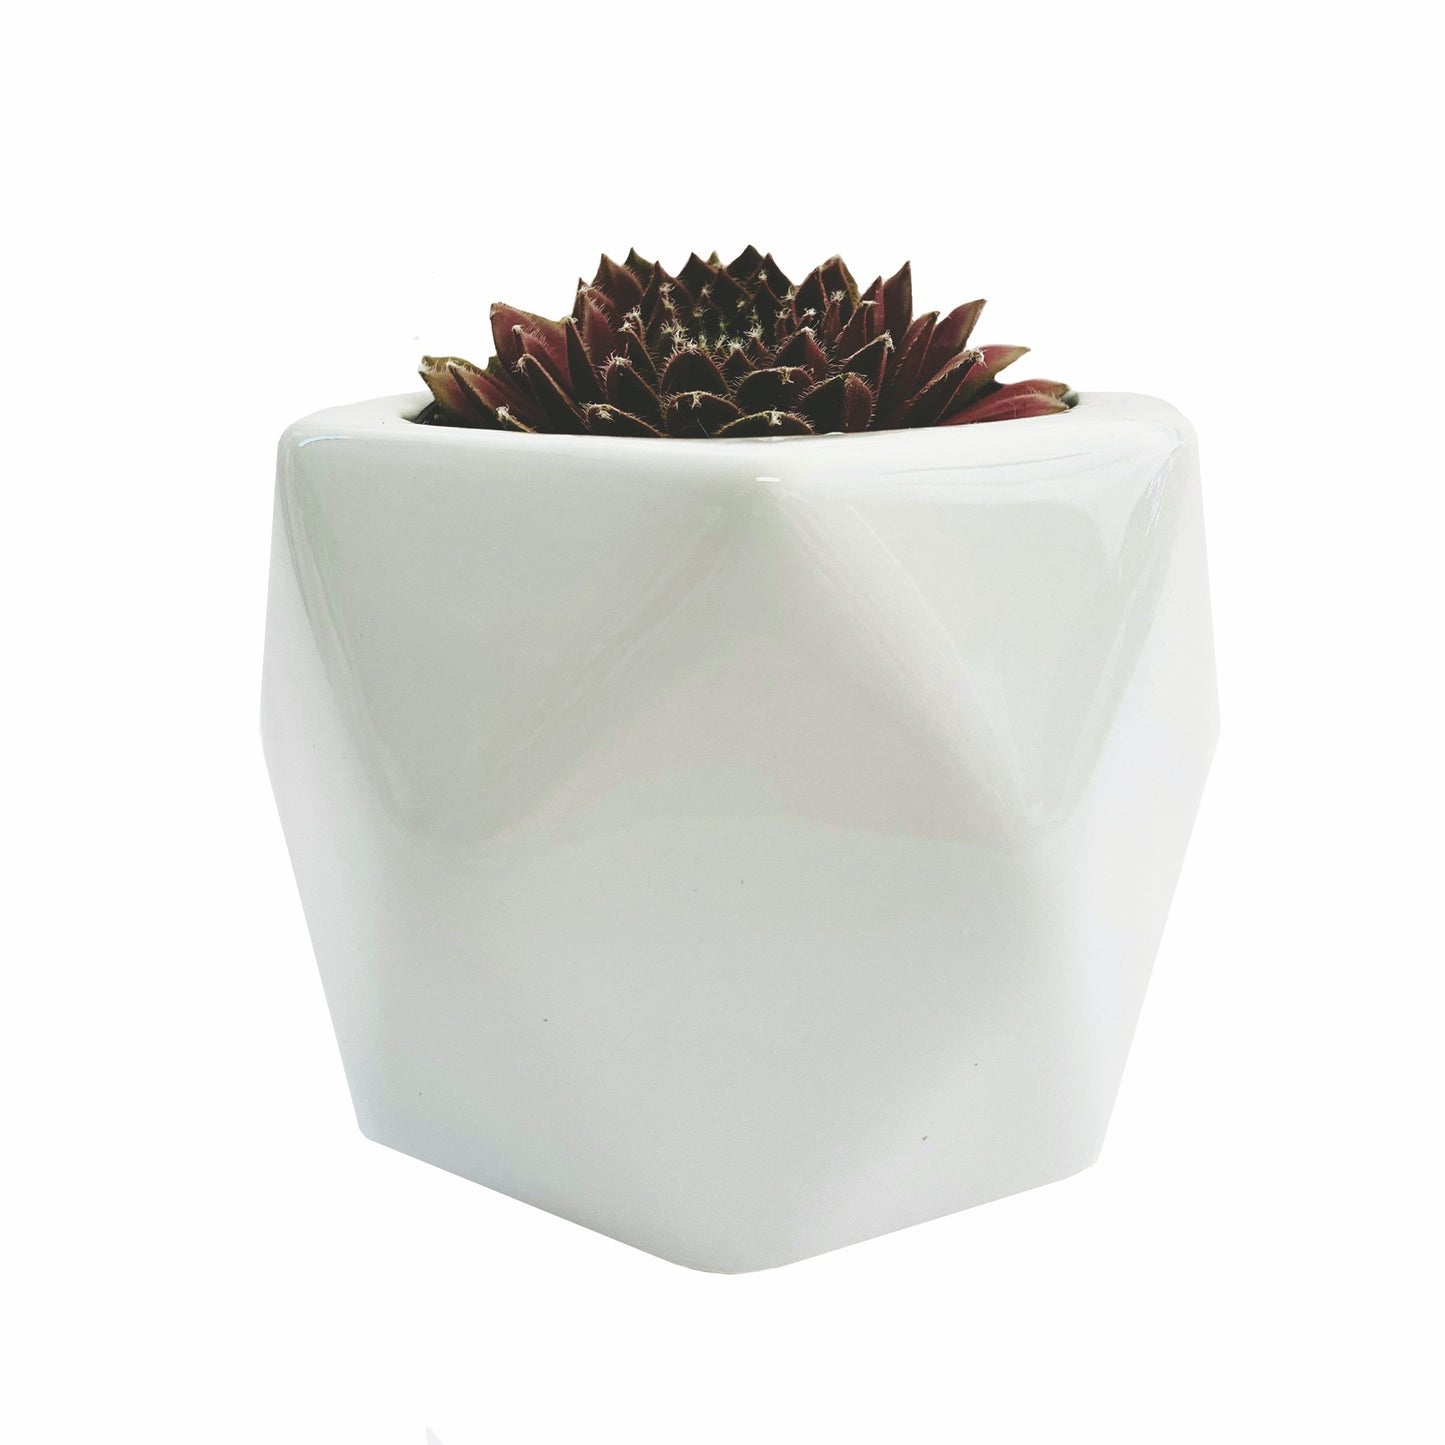 Assorted Succulents in a White Round Diamond Ceramic Pot